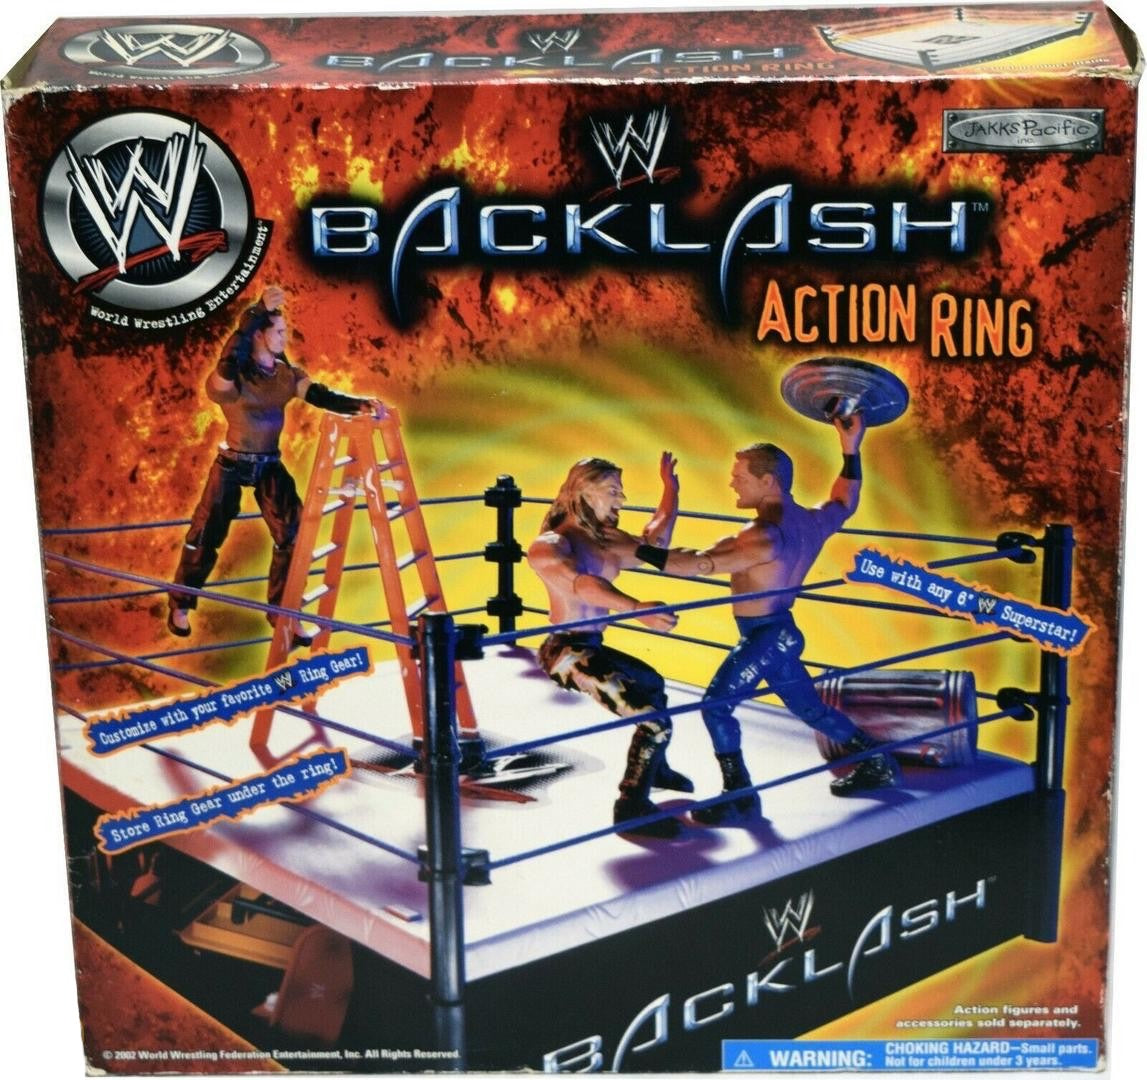 2002 WWE Jakks Pacific R-3 Tech Backlash Action Ring